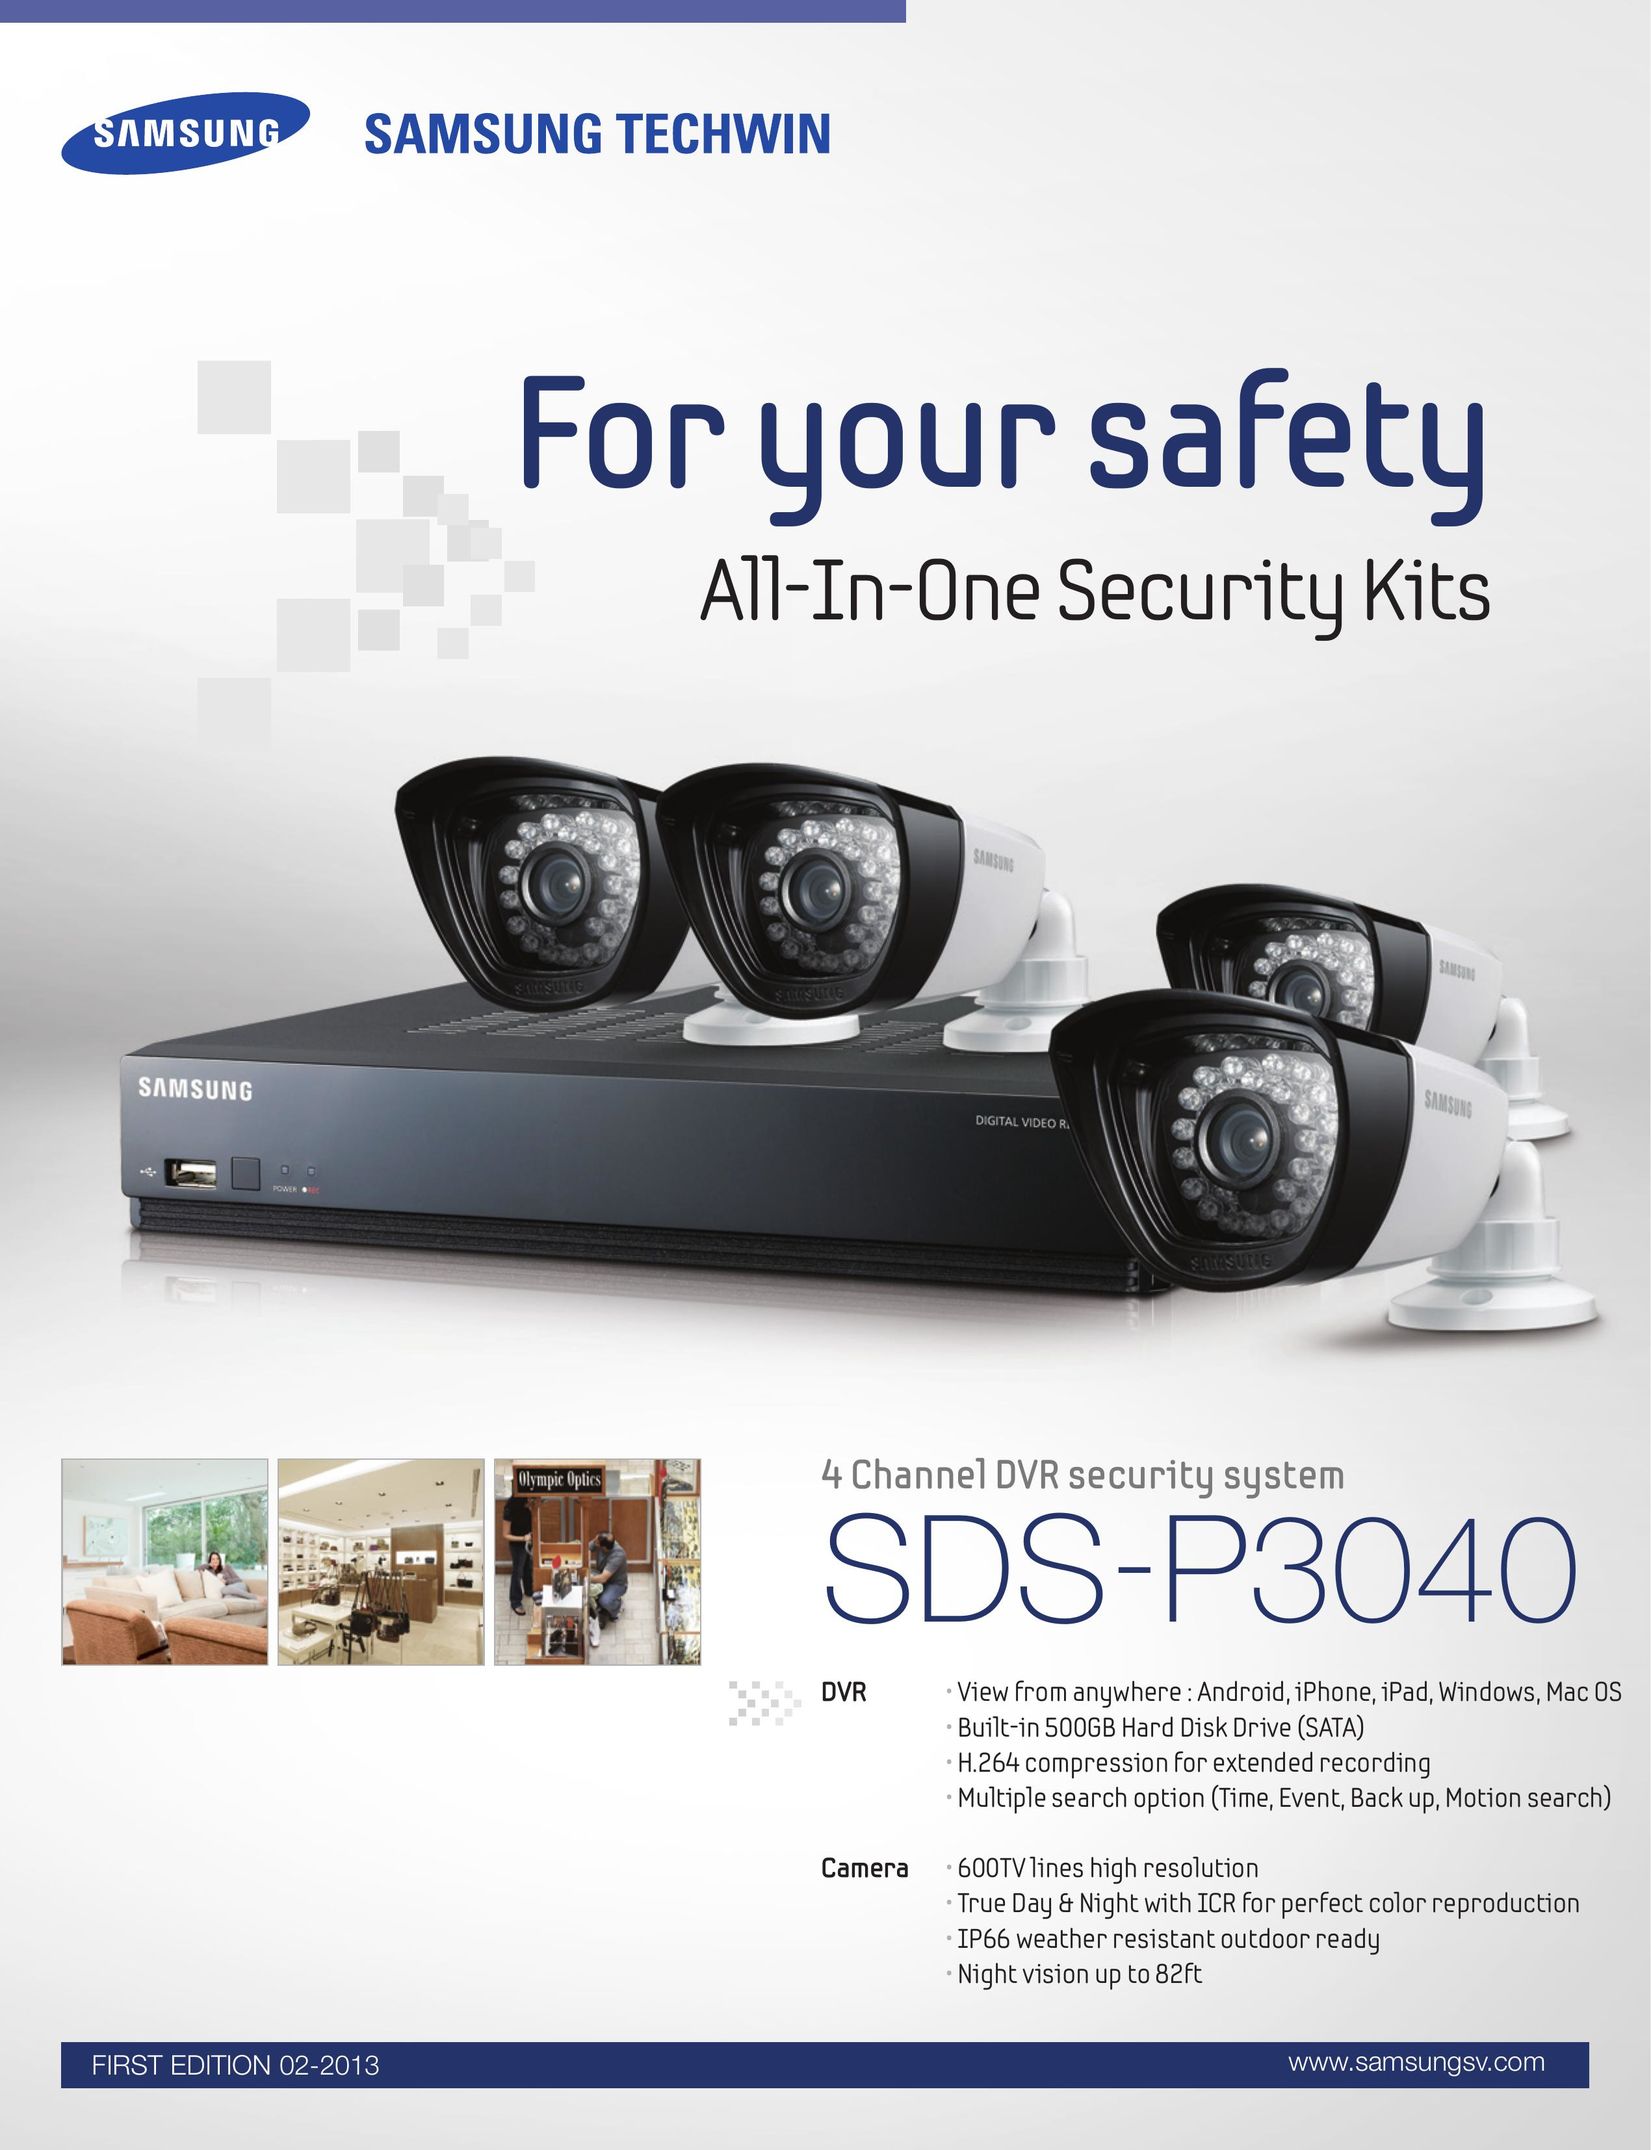 Samsung SDSV3040 Home Security System User Manual